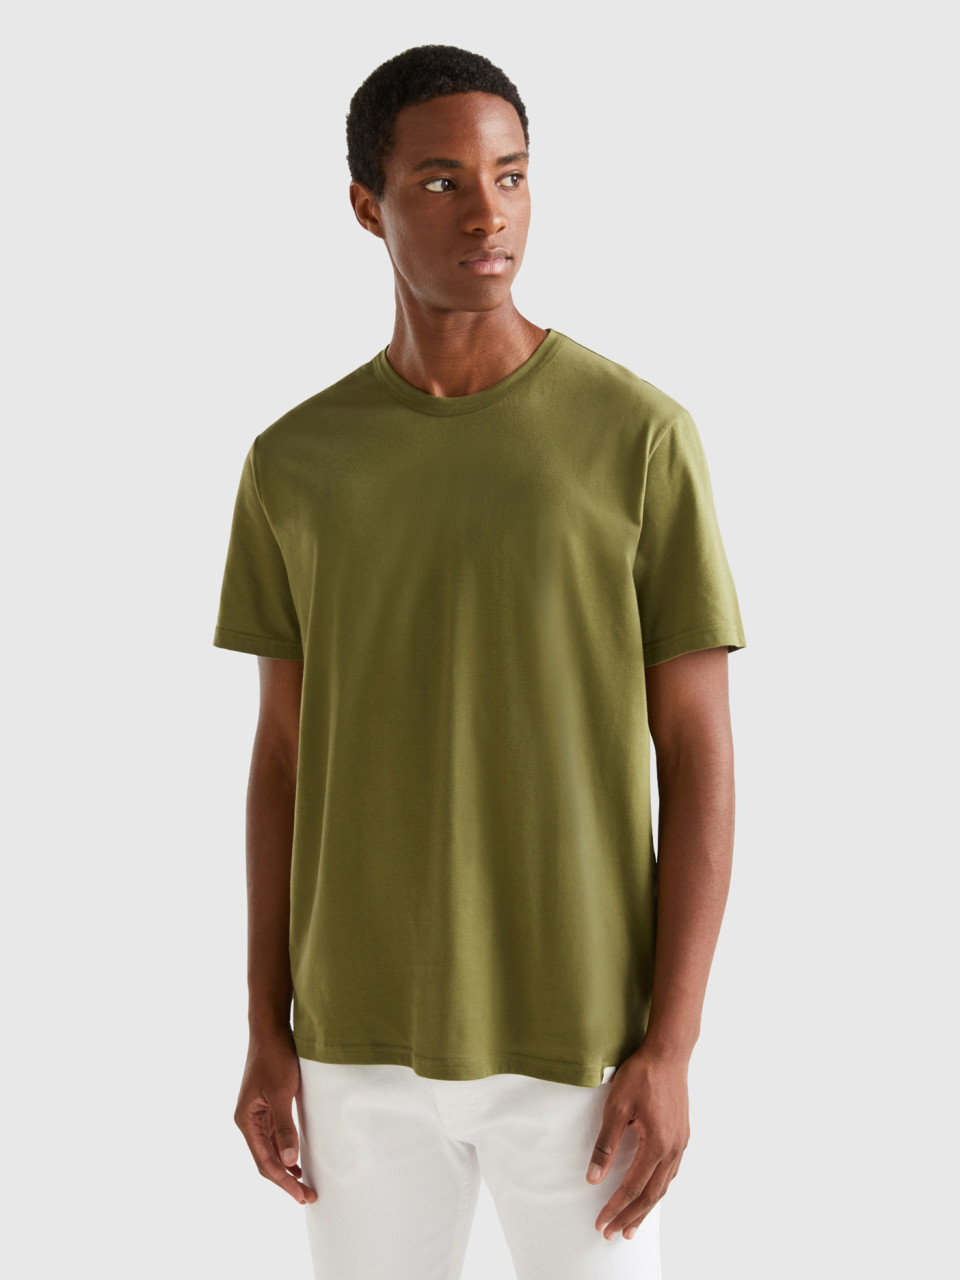 Benetton, T-shirt In Warm Cotton, Military Green, Men